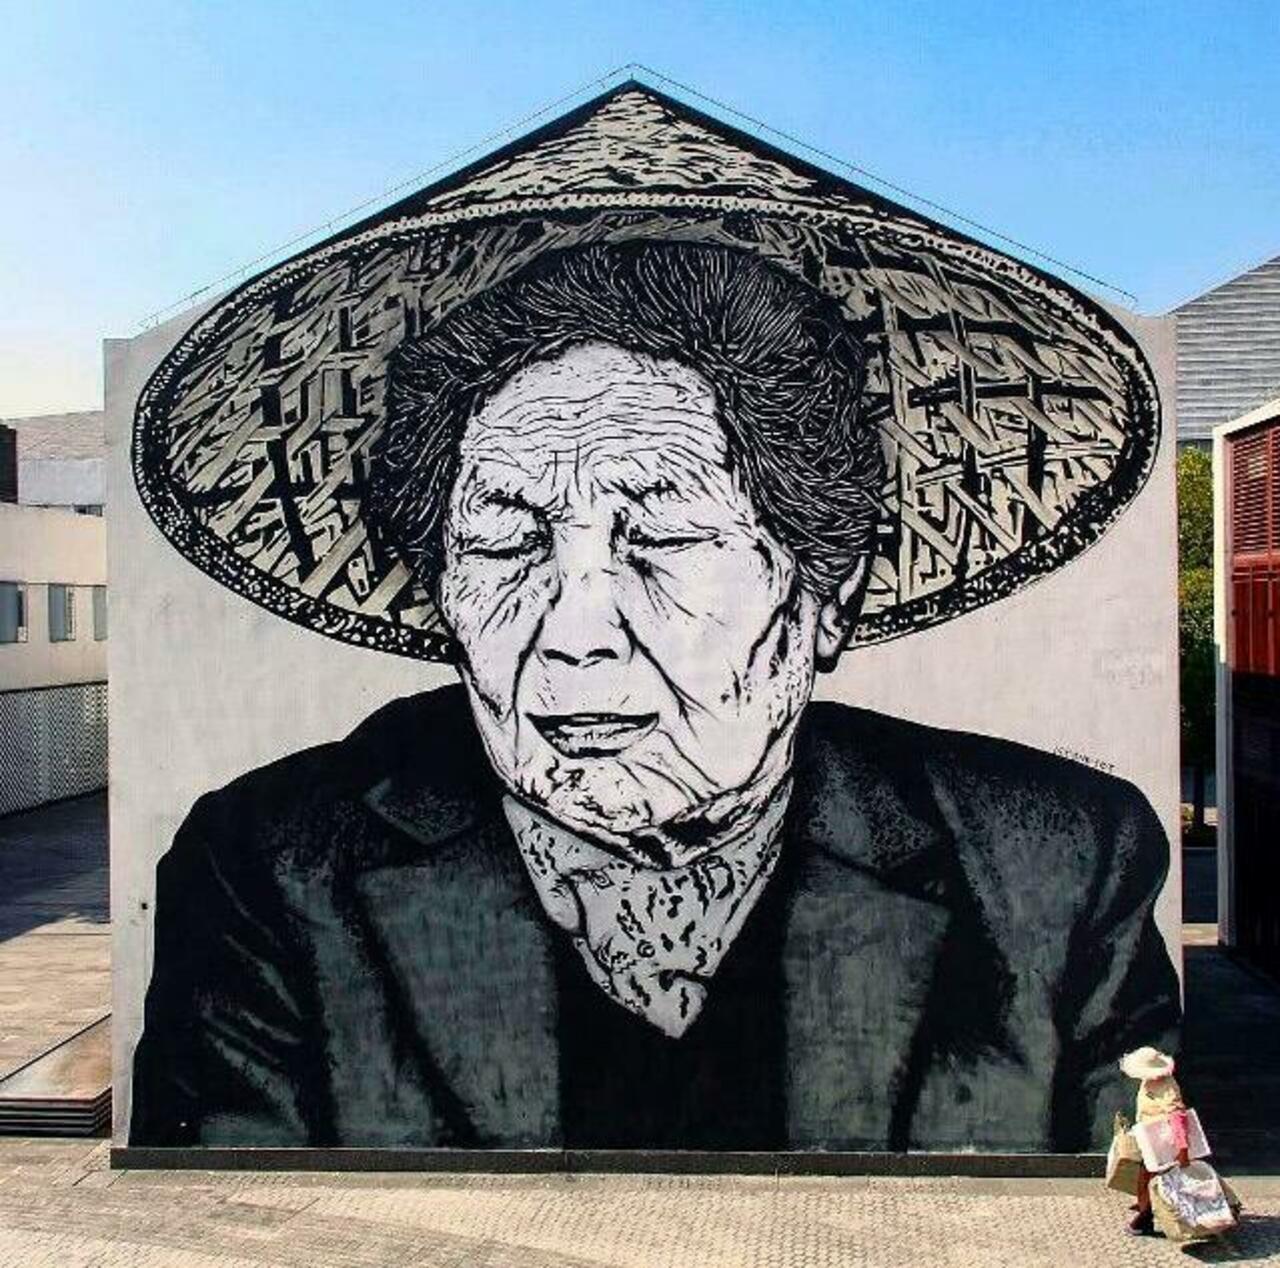 RT belilac "RT belilac "New Street Art by icy&sot in Shanghai  

#art #graffiti #mural #streetart http://t.co/X6HQHn92ua""